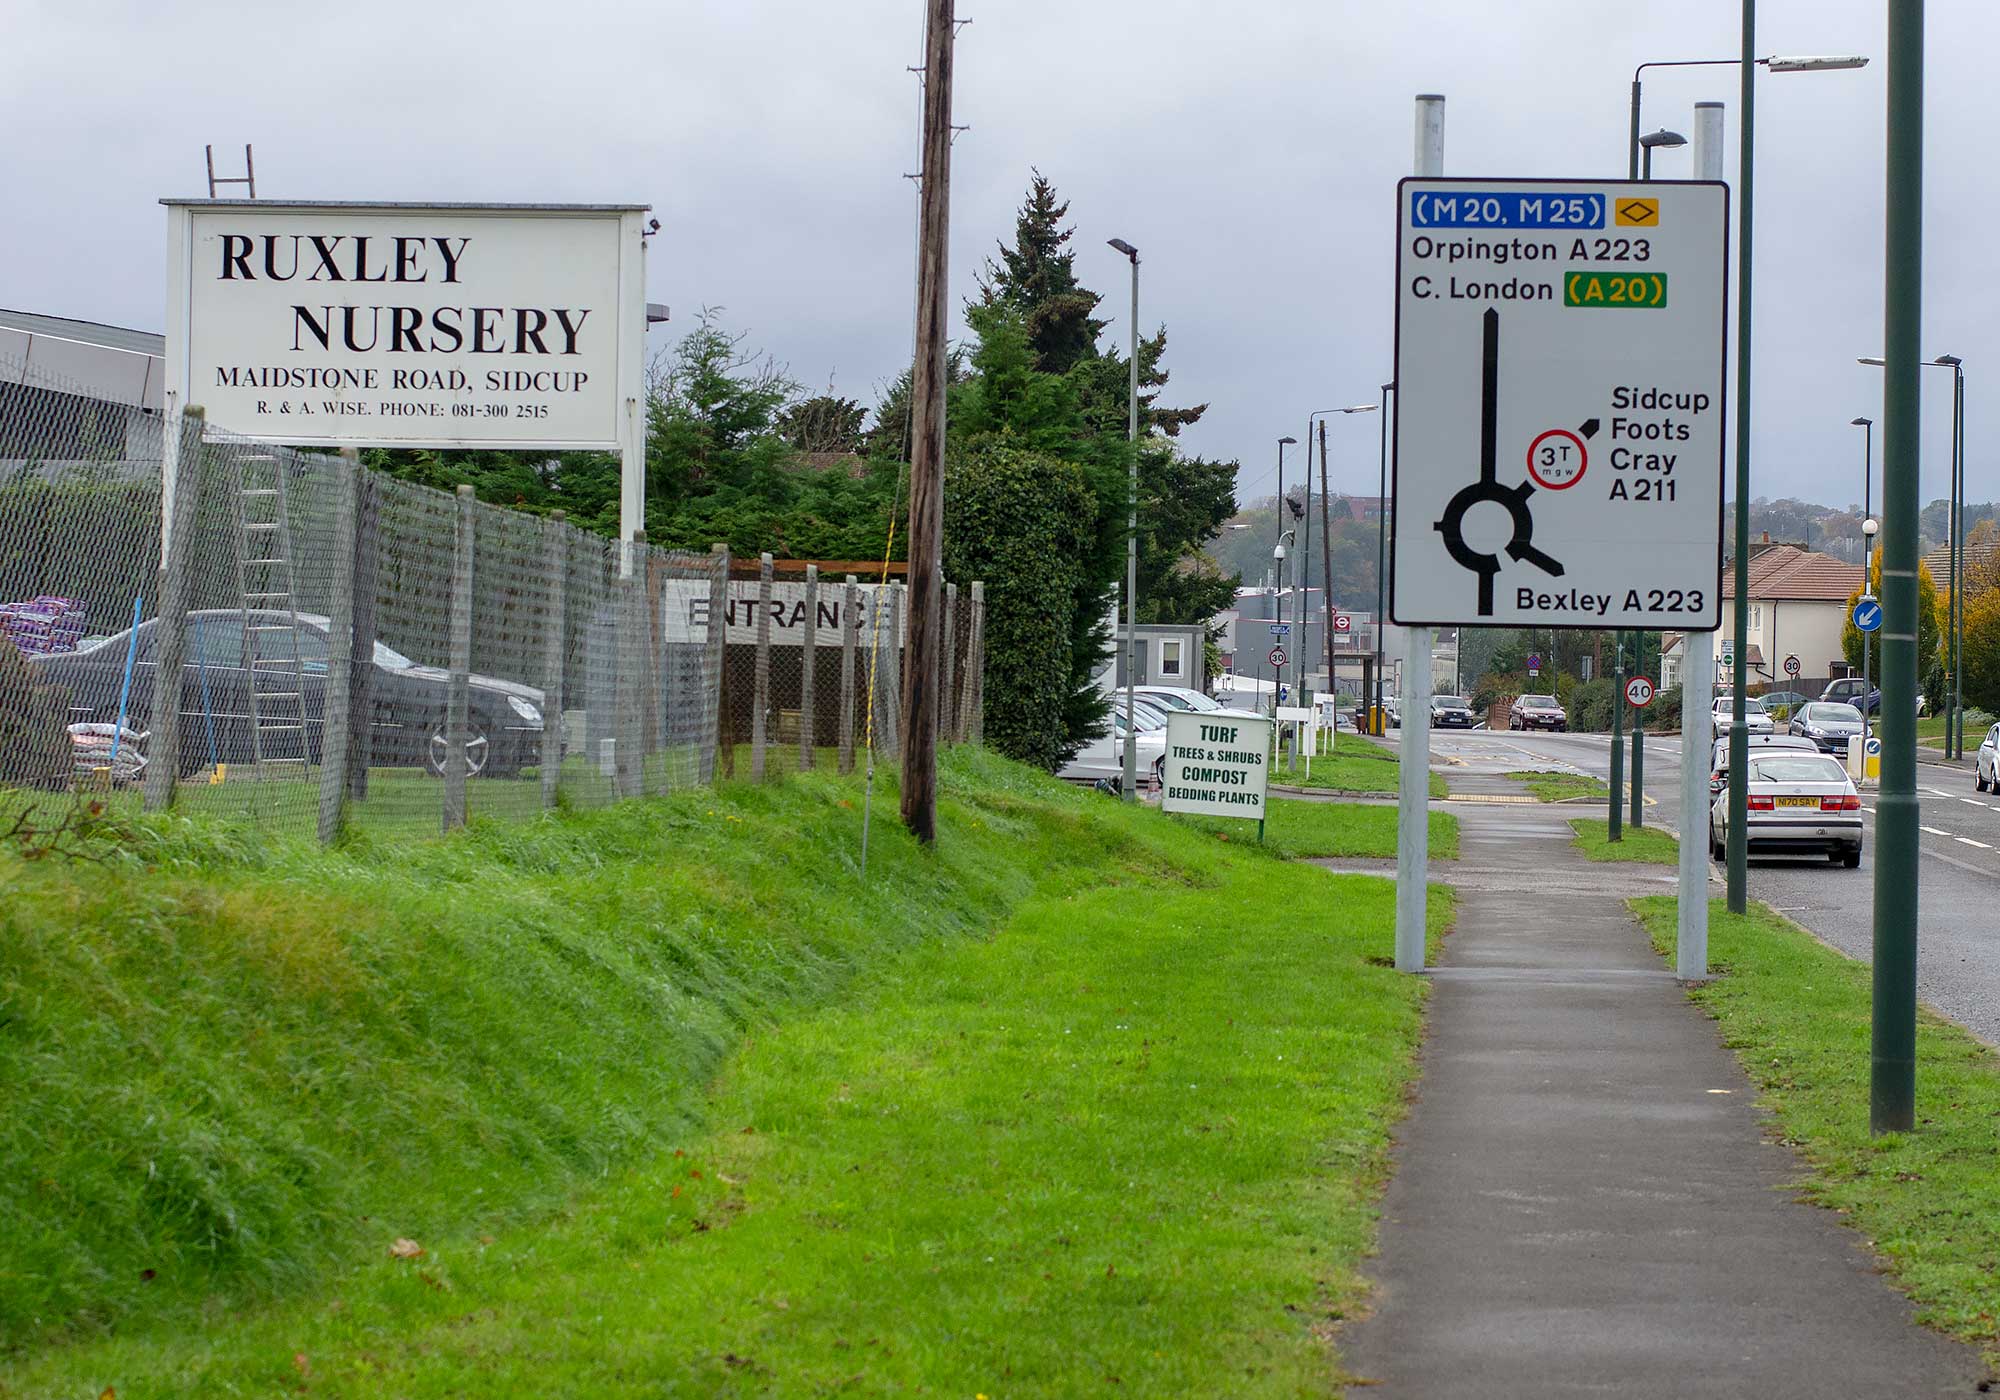 Ruxley nursery sign